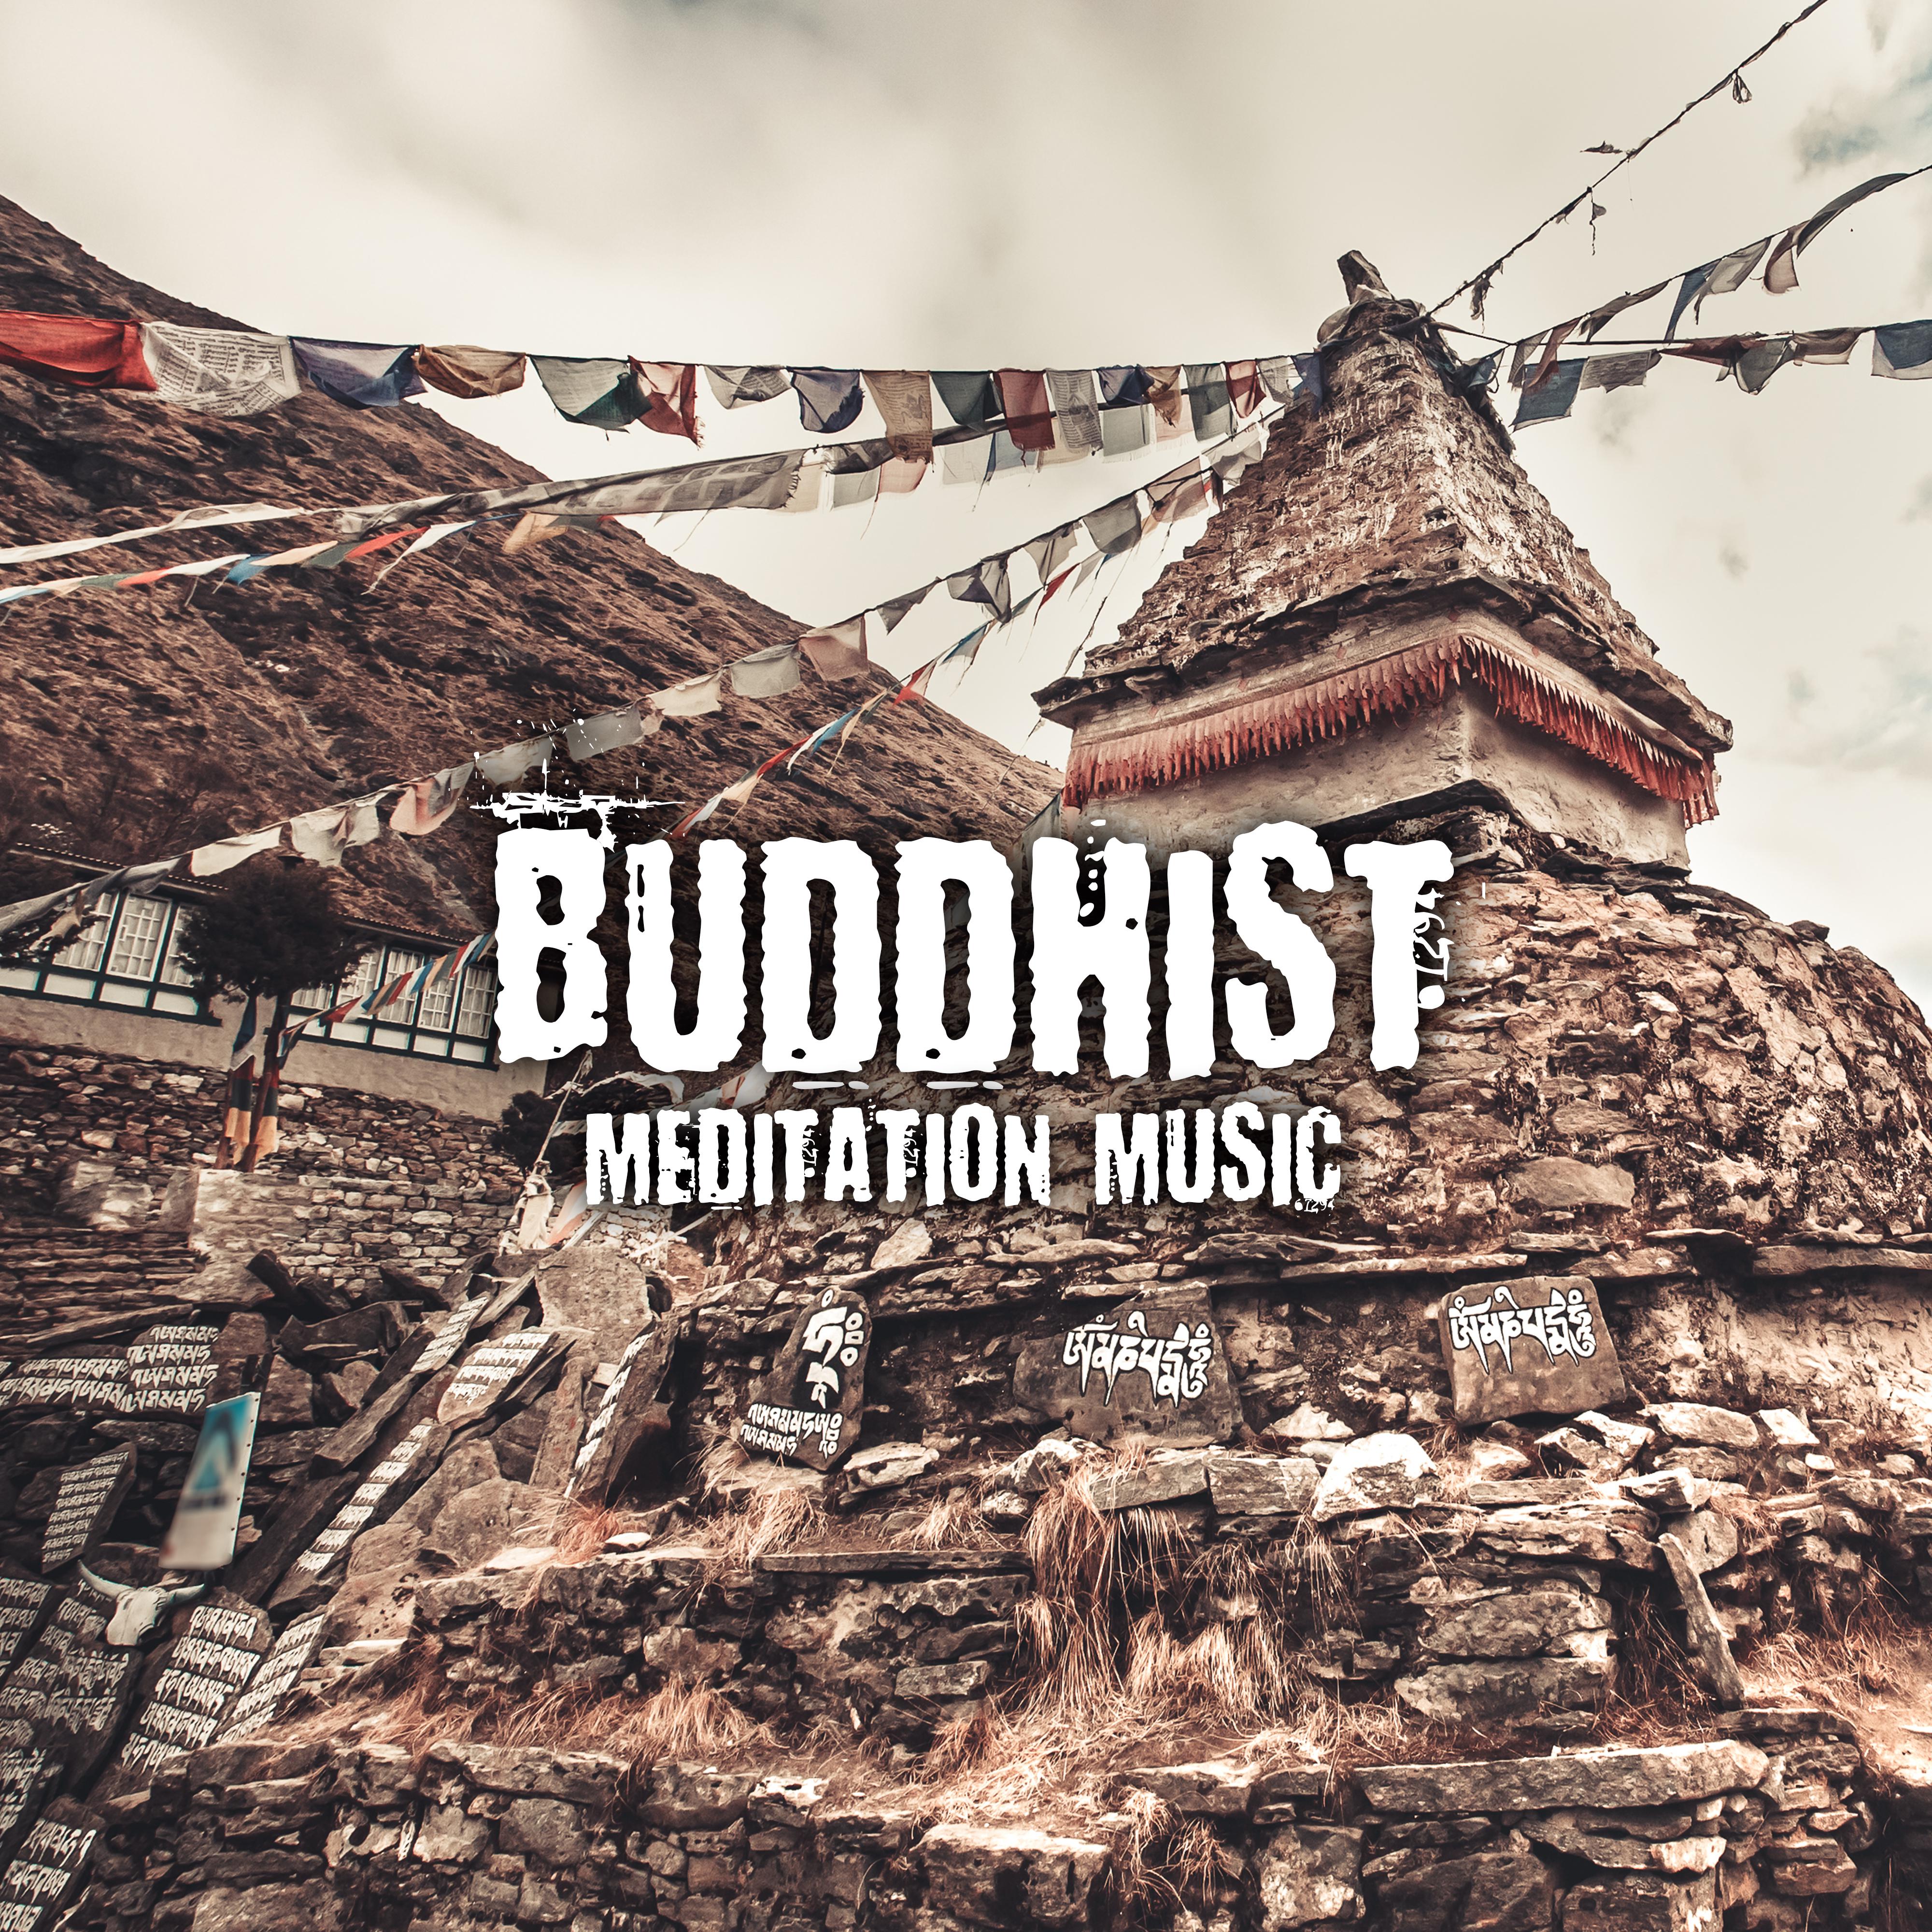 Buddhist Meditation Music